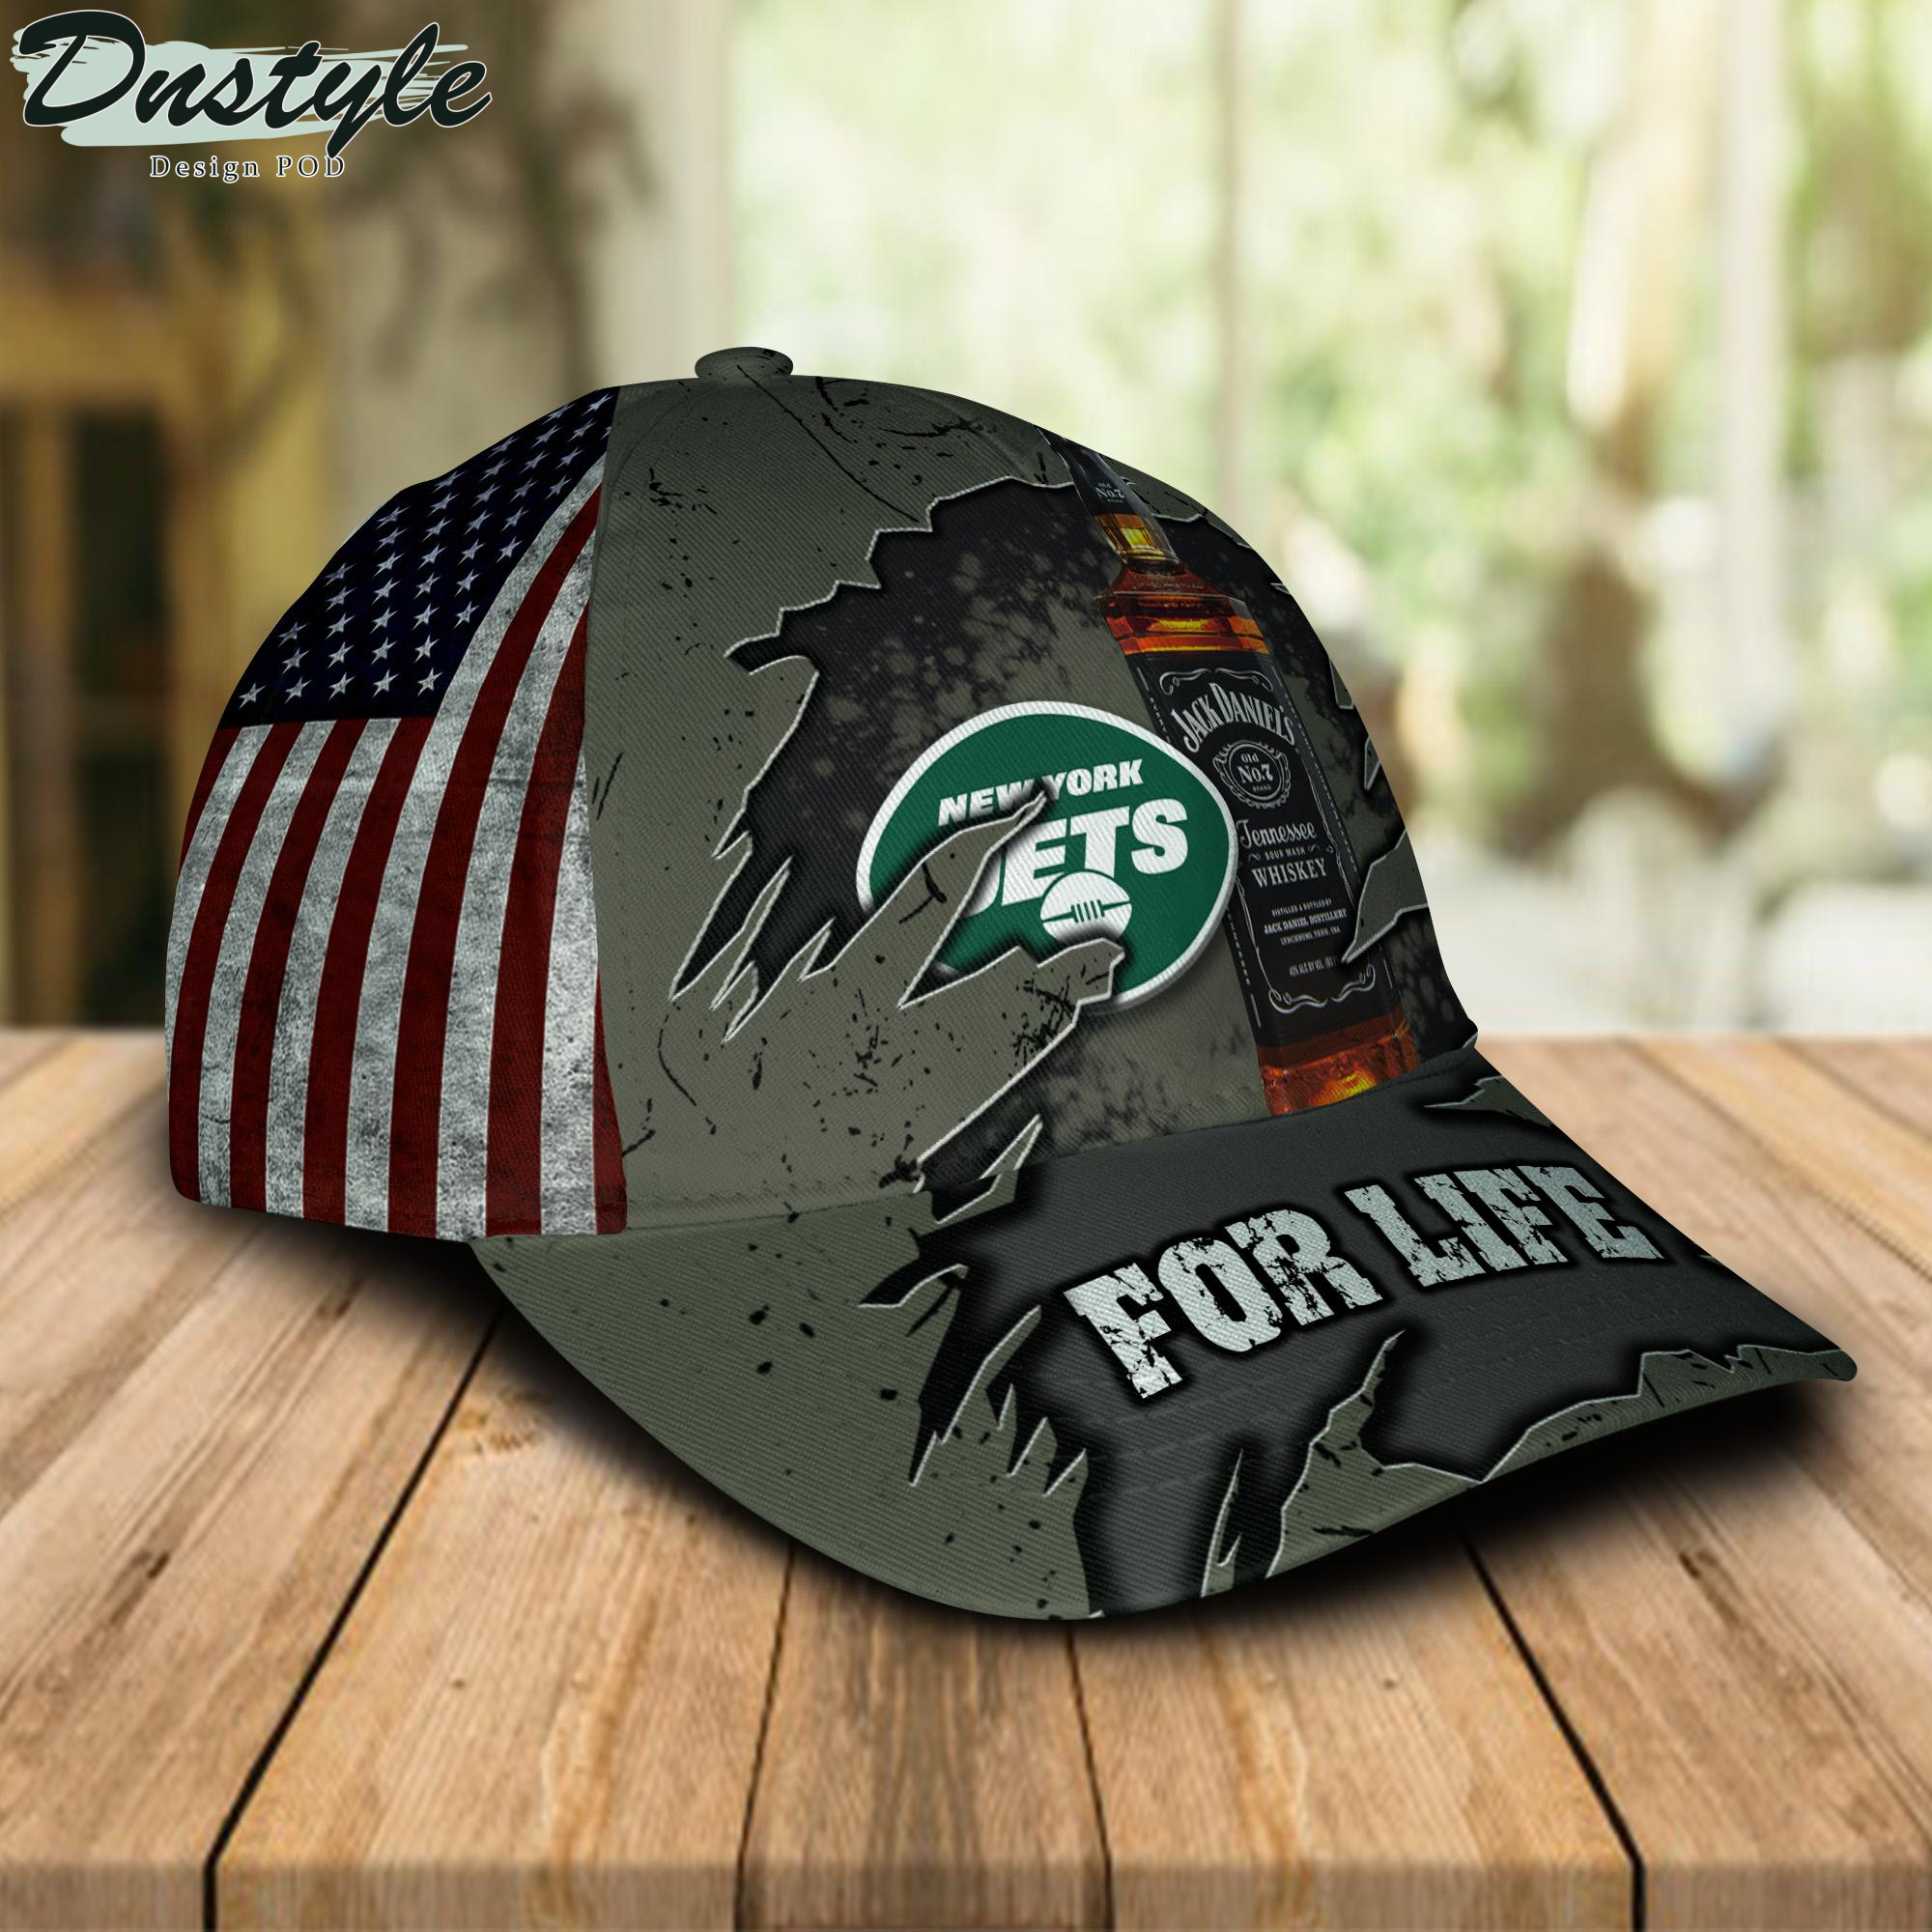 New York Jets For Jack Daniels Life Classic Cap